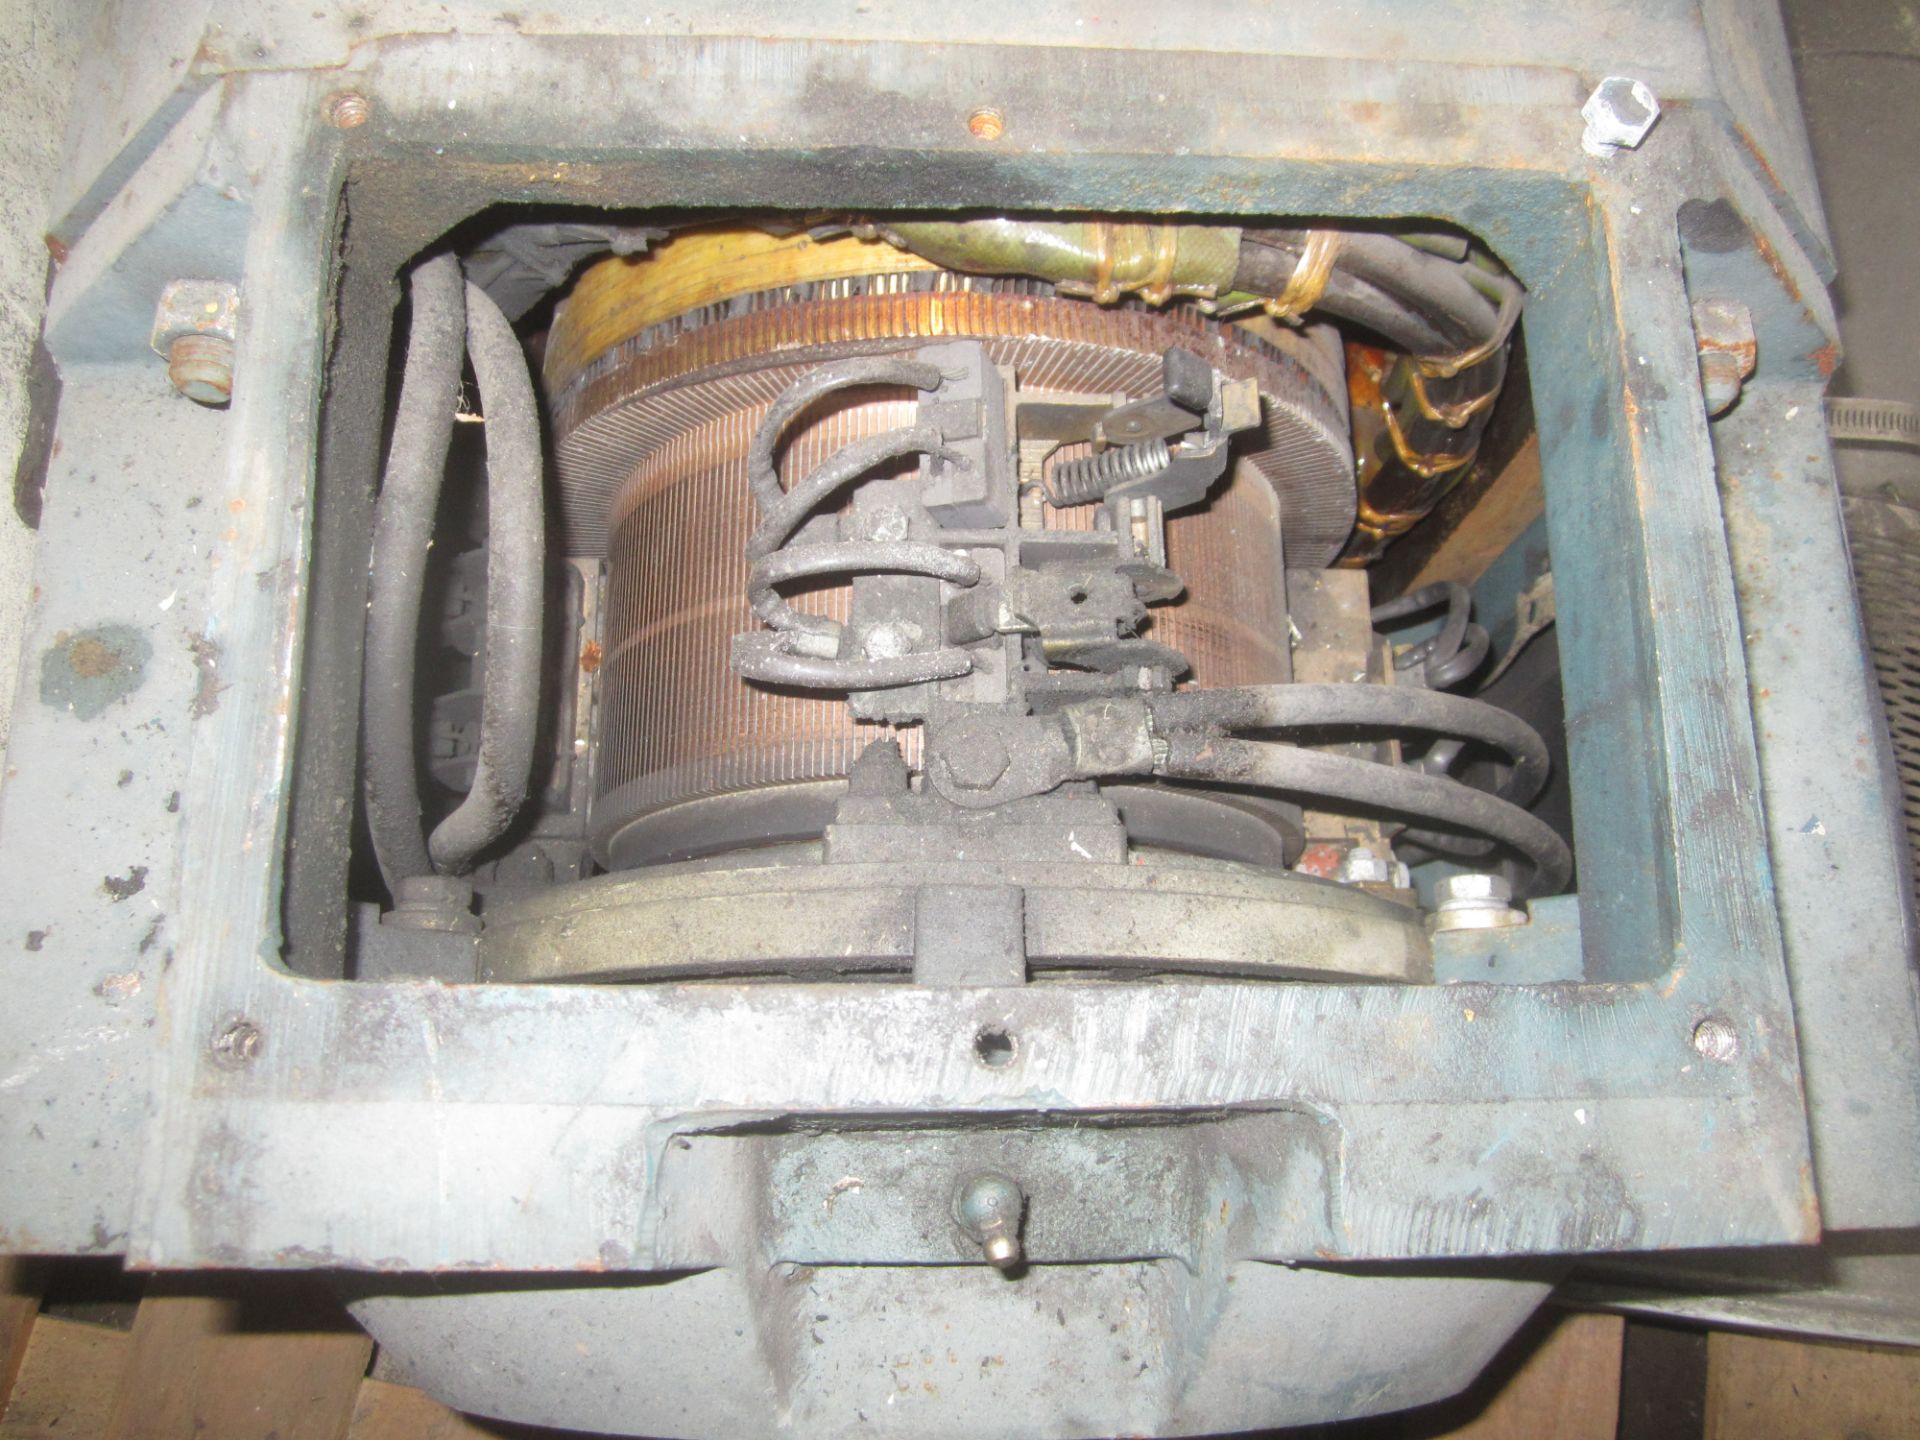 Reliance RPMIII DC Motor, 200 HP, 1,750 RPM, Needs Repair - Image 3 of 4